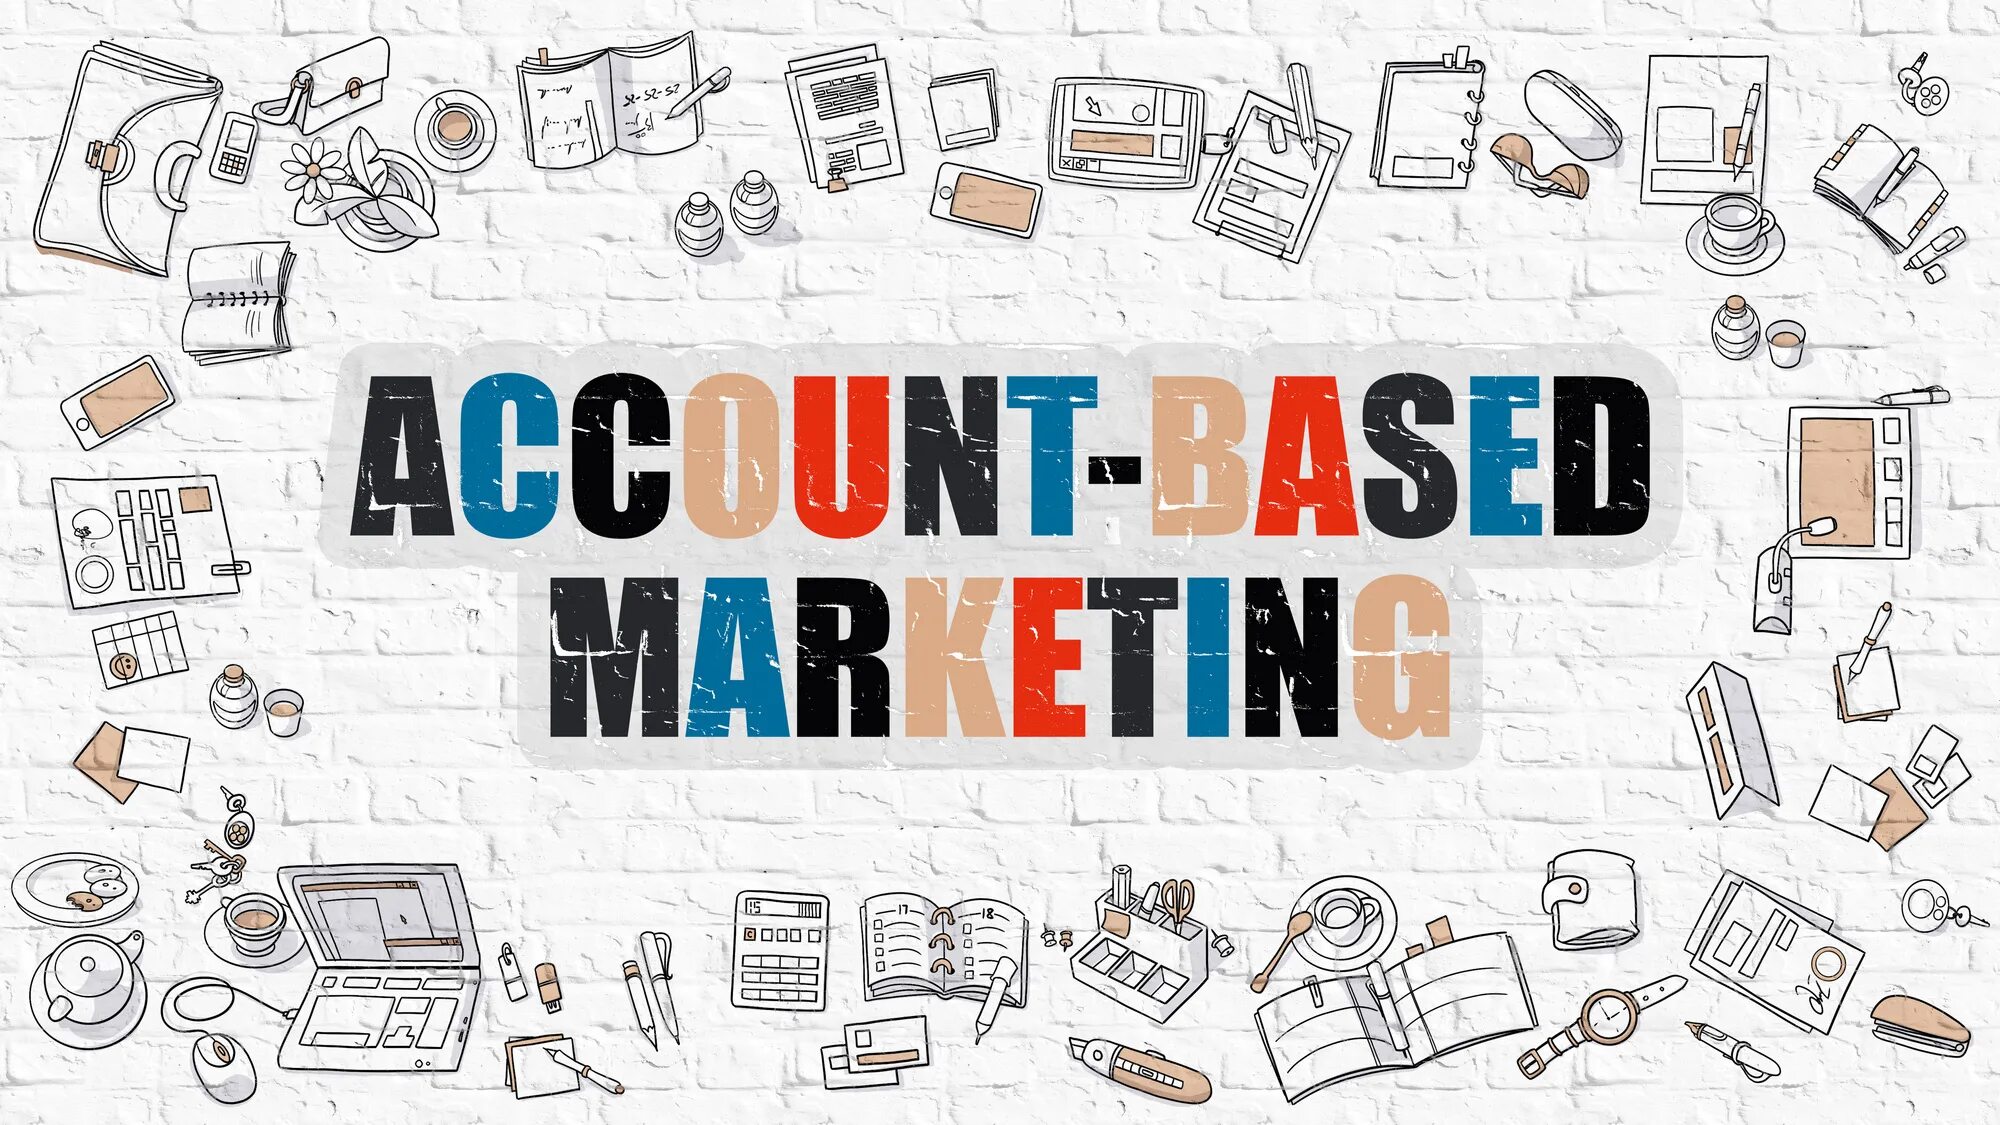 Base accounts. Account based маркетинг. Account based marketing ABM. ABM маркетинг. Библиотечный маркетинг рисунок.